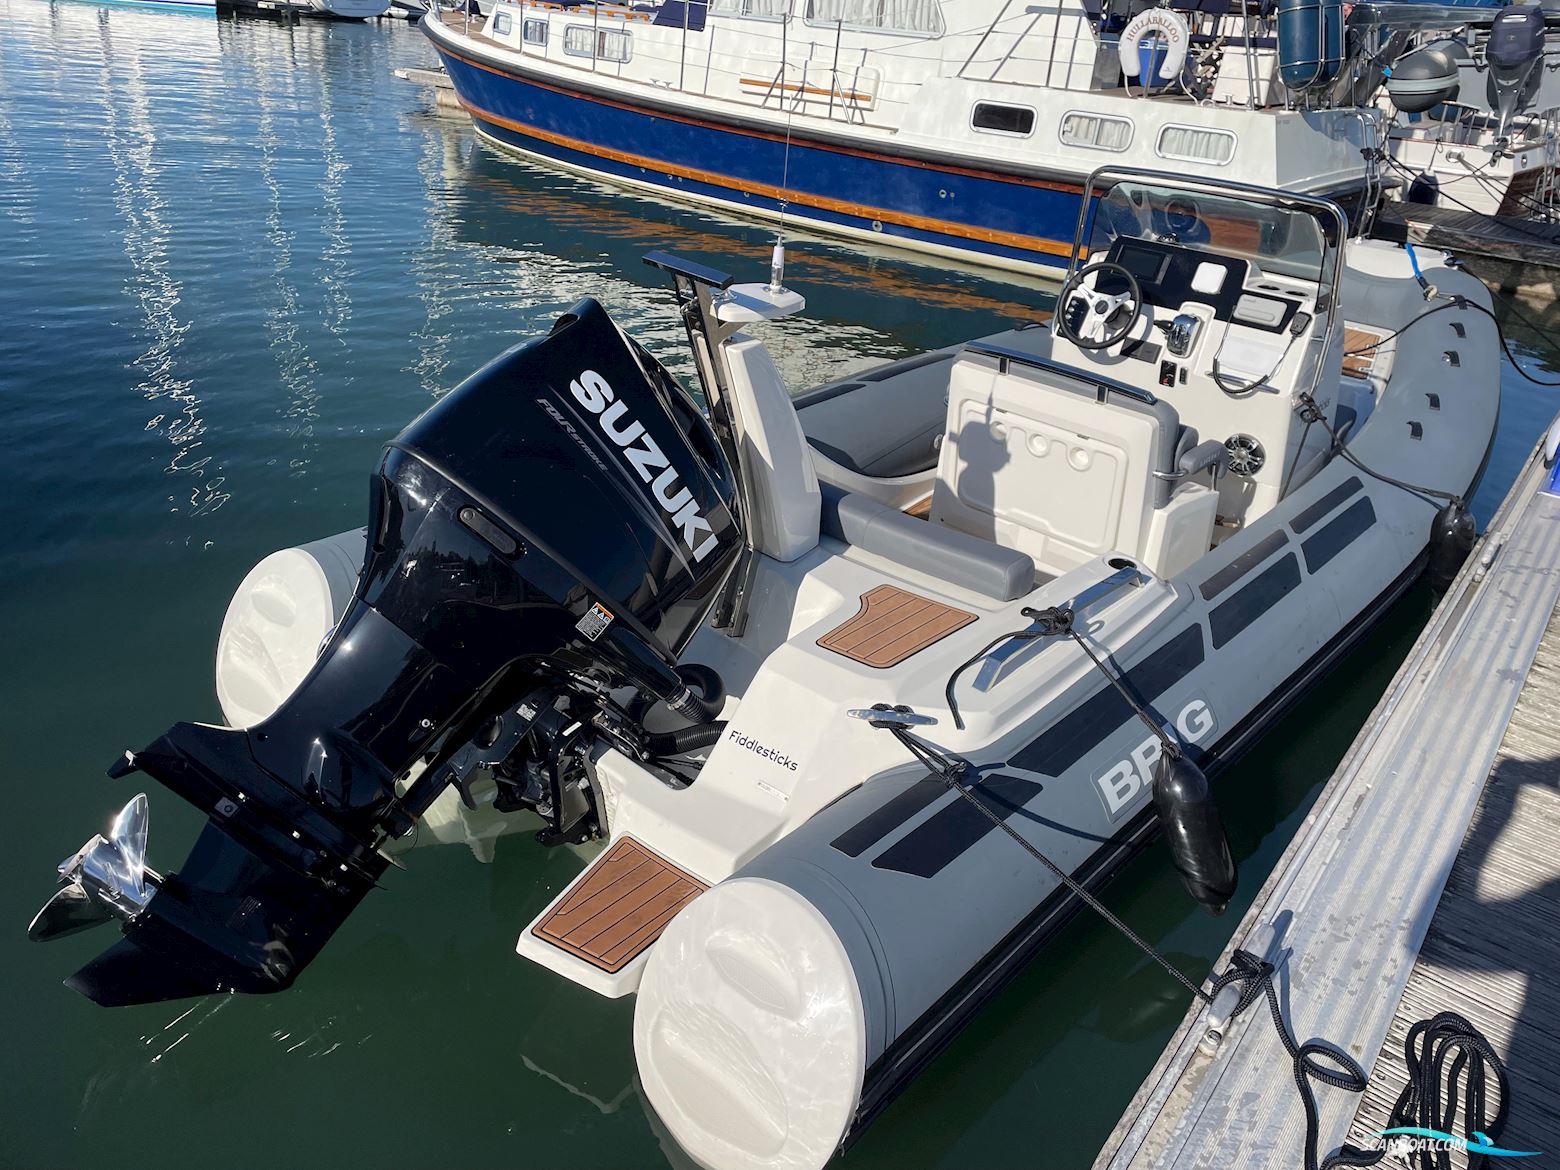 BRIG RIBs Eagle 6.7 Motor boat 2021, with Suzuki engine, United Kingdom